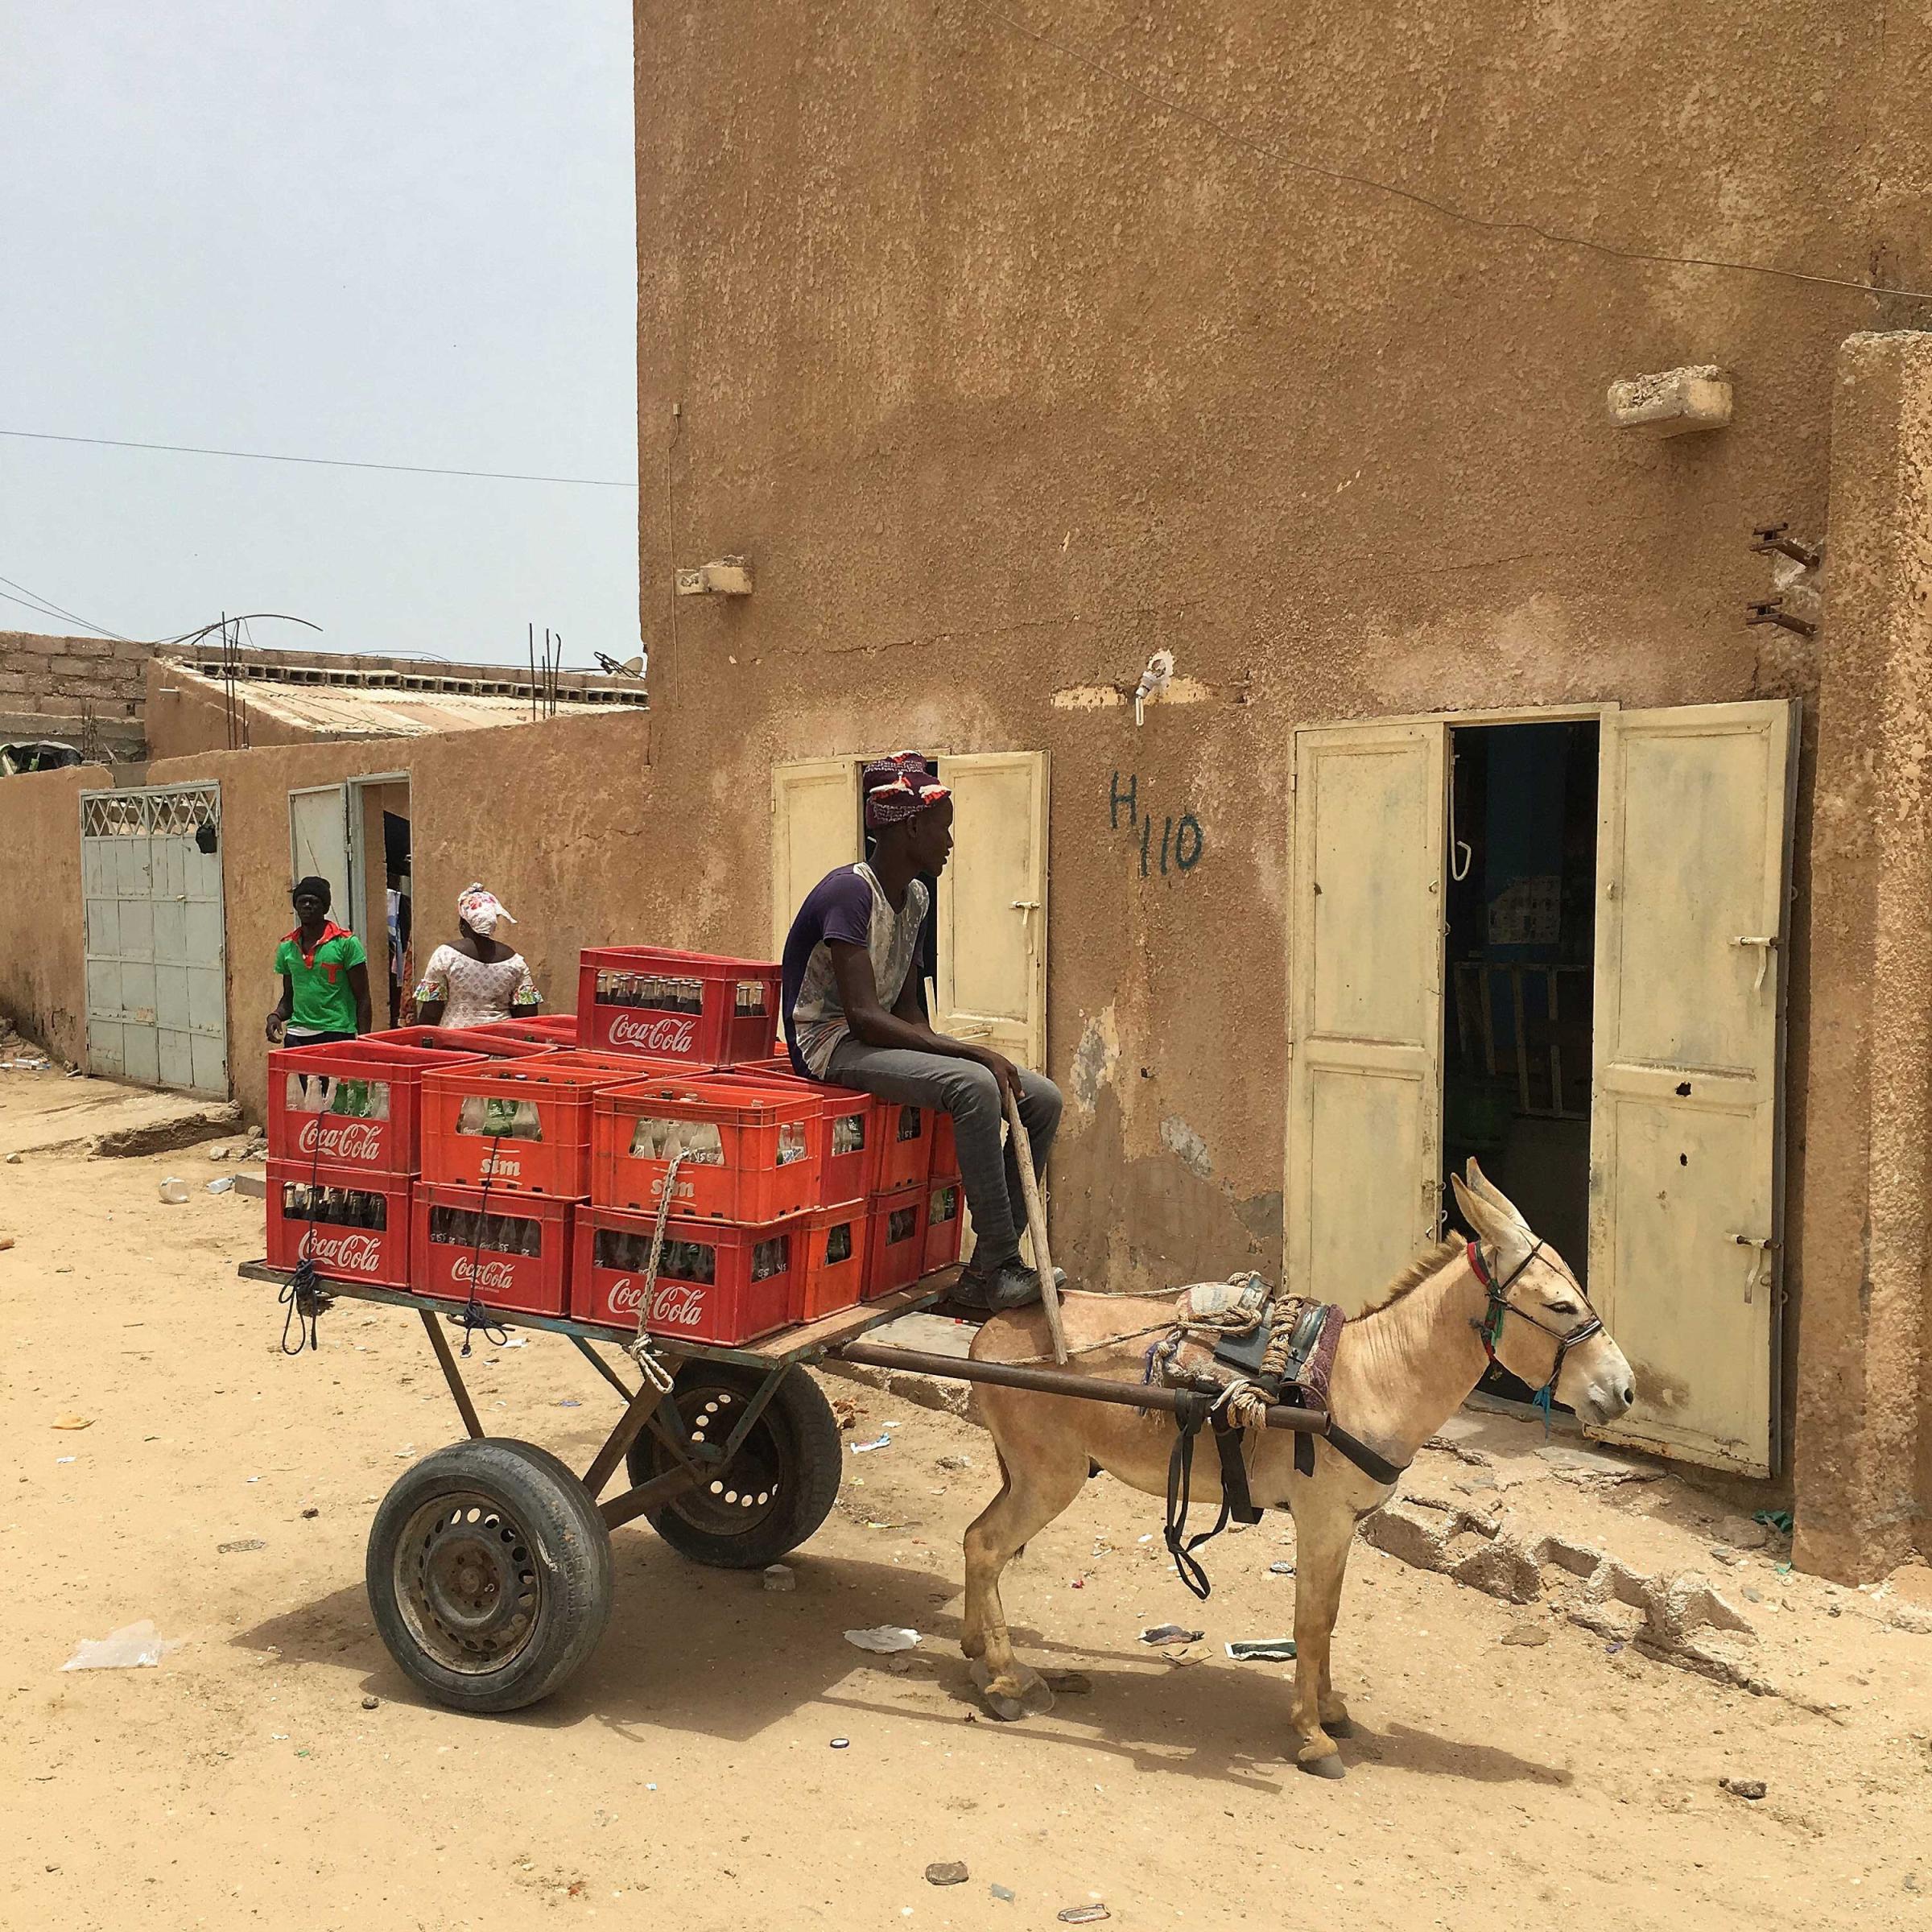 Aziz makes Coca-Cola deliveries with his donkey in Nouakchott, Mauritania. @dcoreraphotography